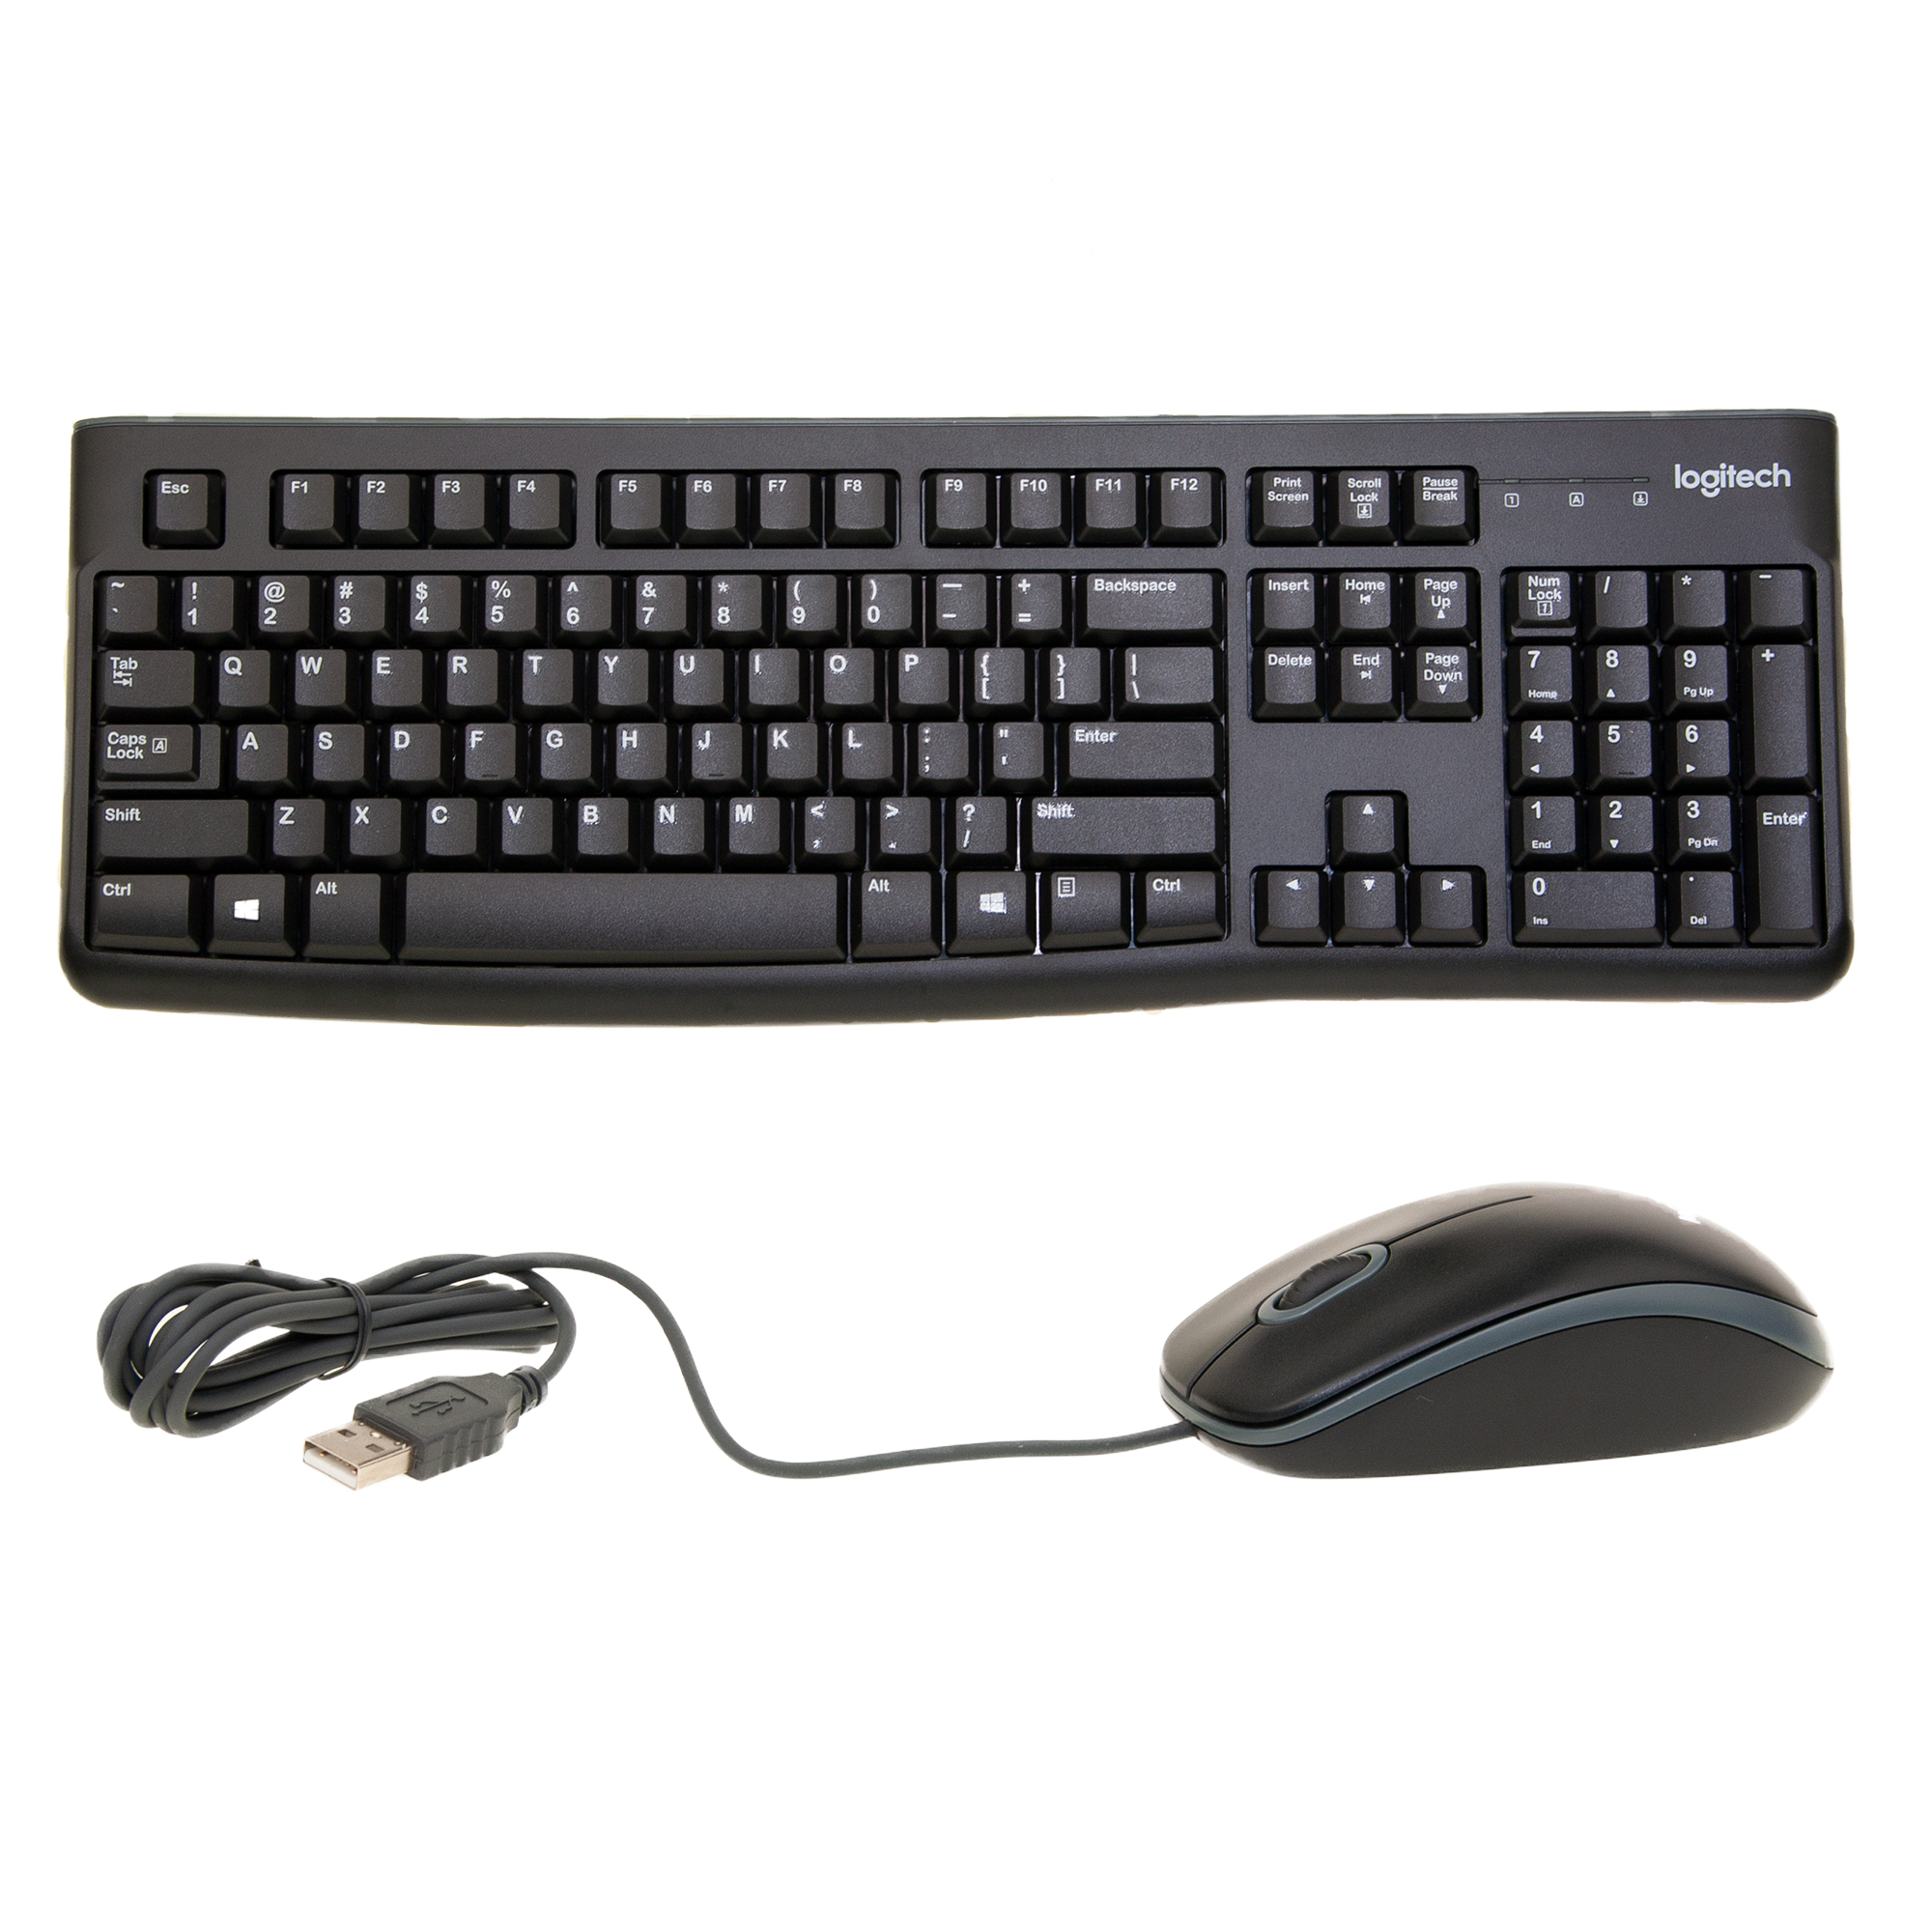 skildpadde At understrege Materialisme Logitech MK-120 USB Keyboard and Mouse Combo, Black